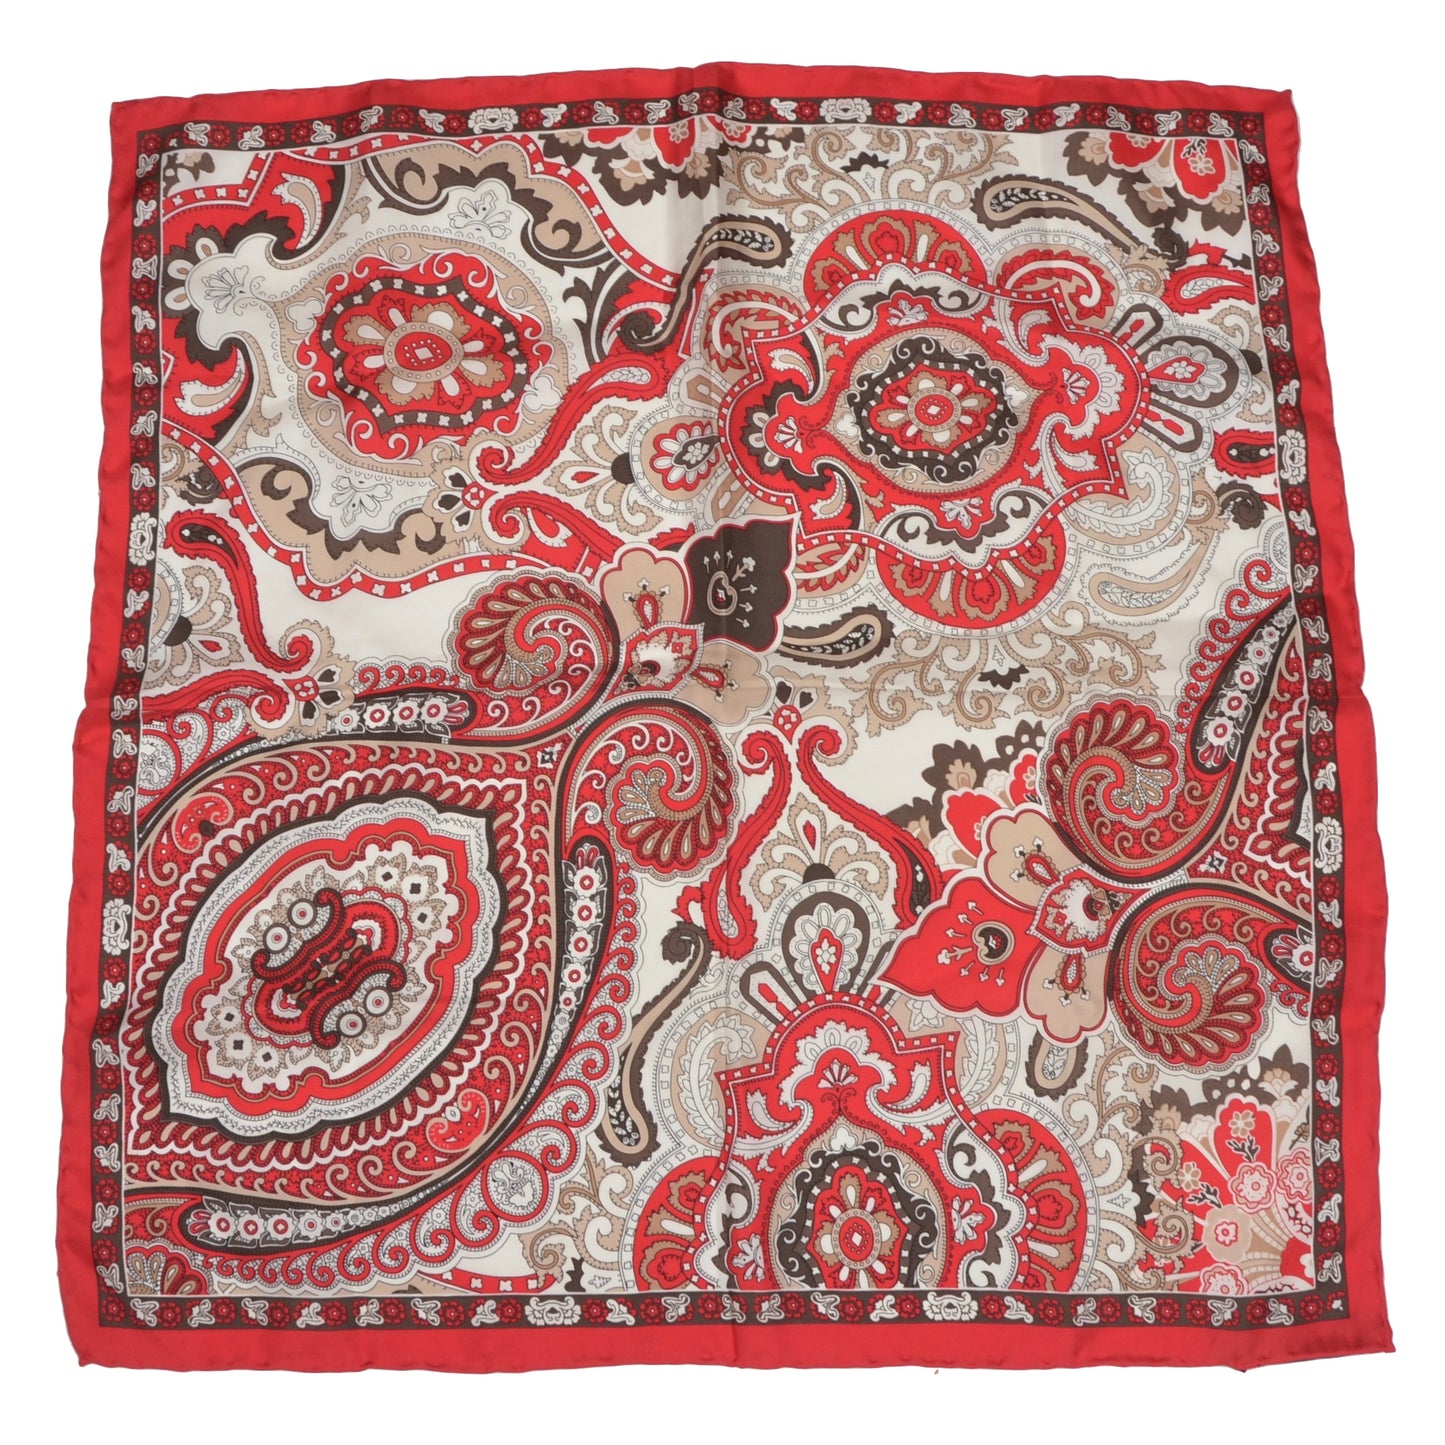 Passigatti Handrolled Silk Pocket Square - Red Paisley